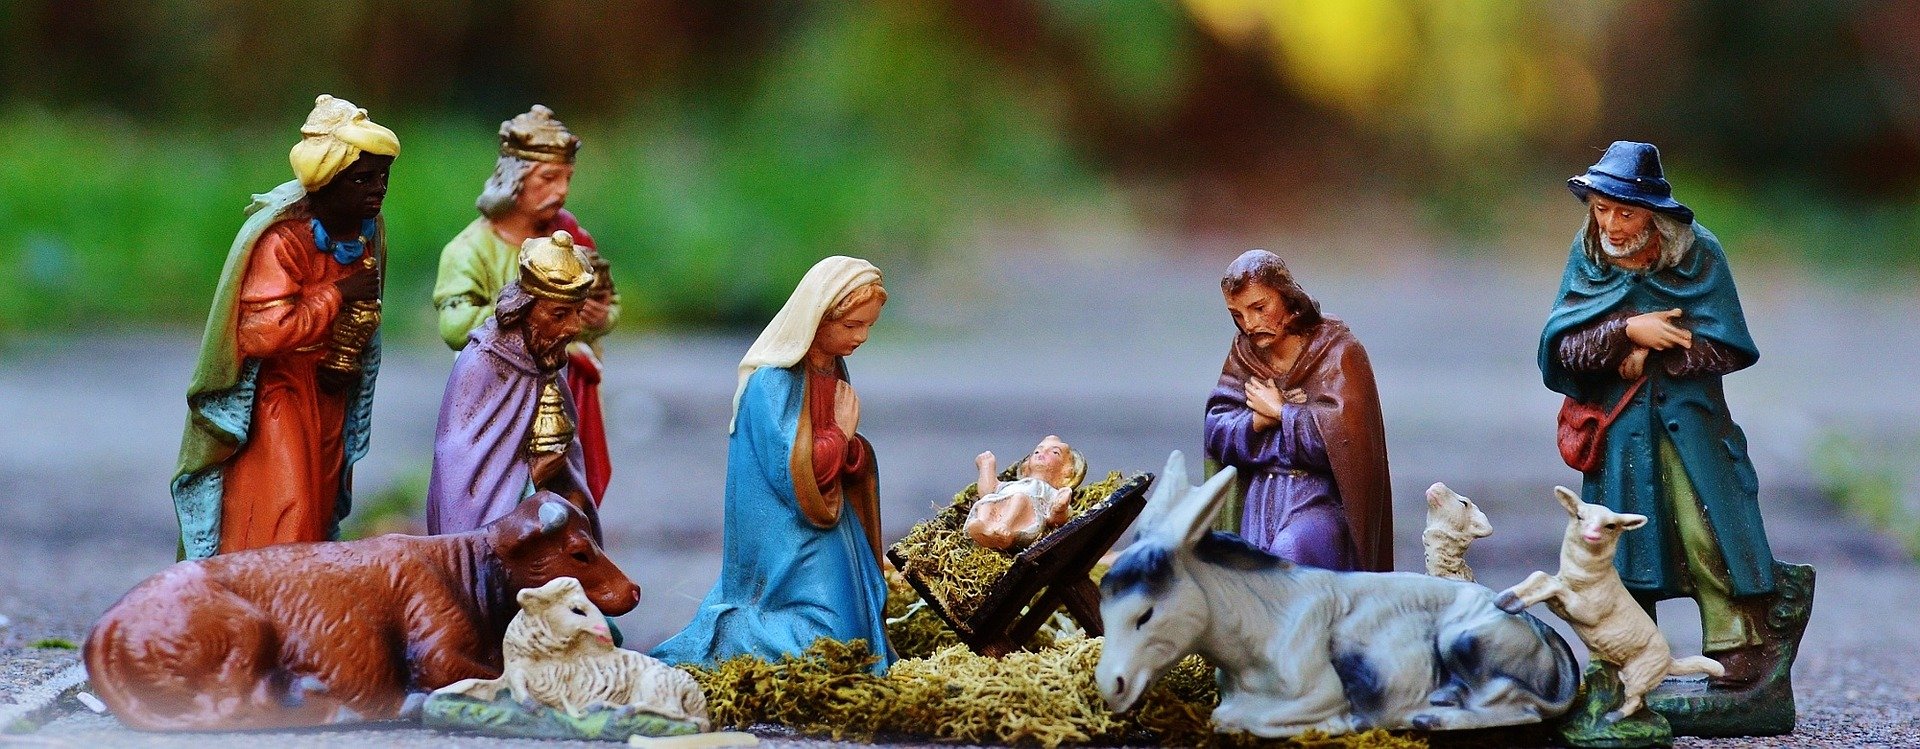 Natal | SJO Artigos Religiosos